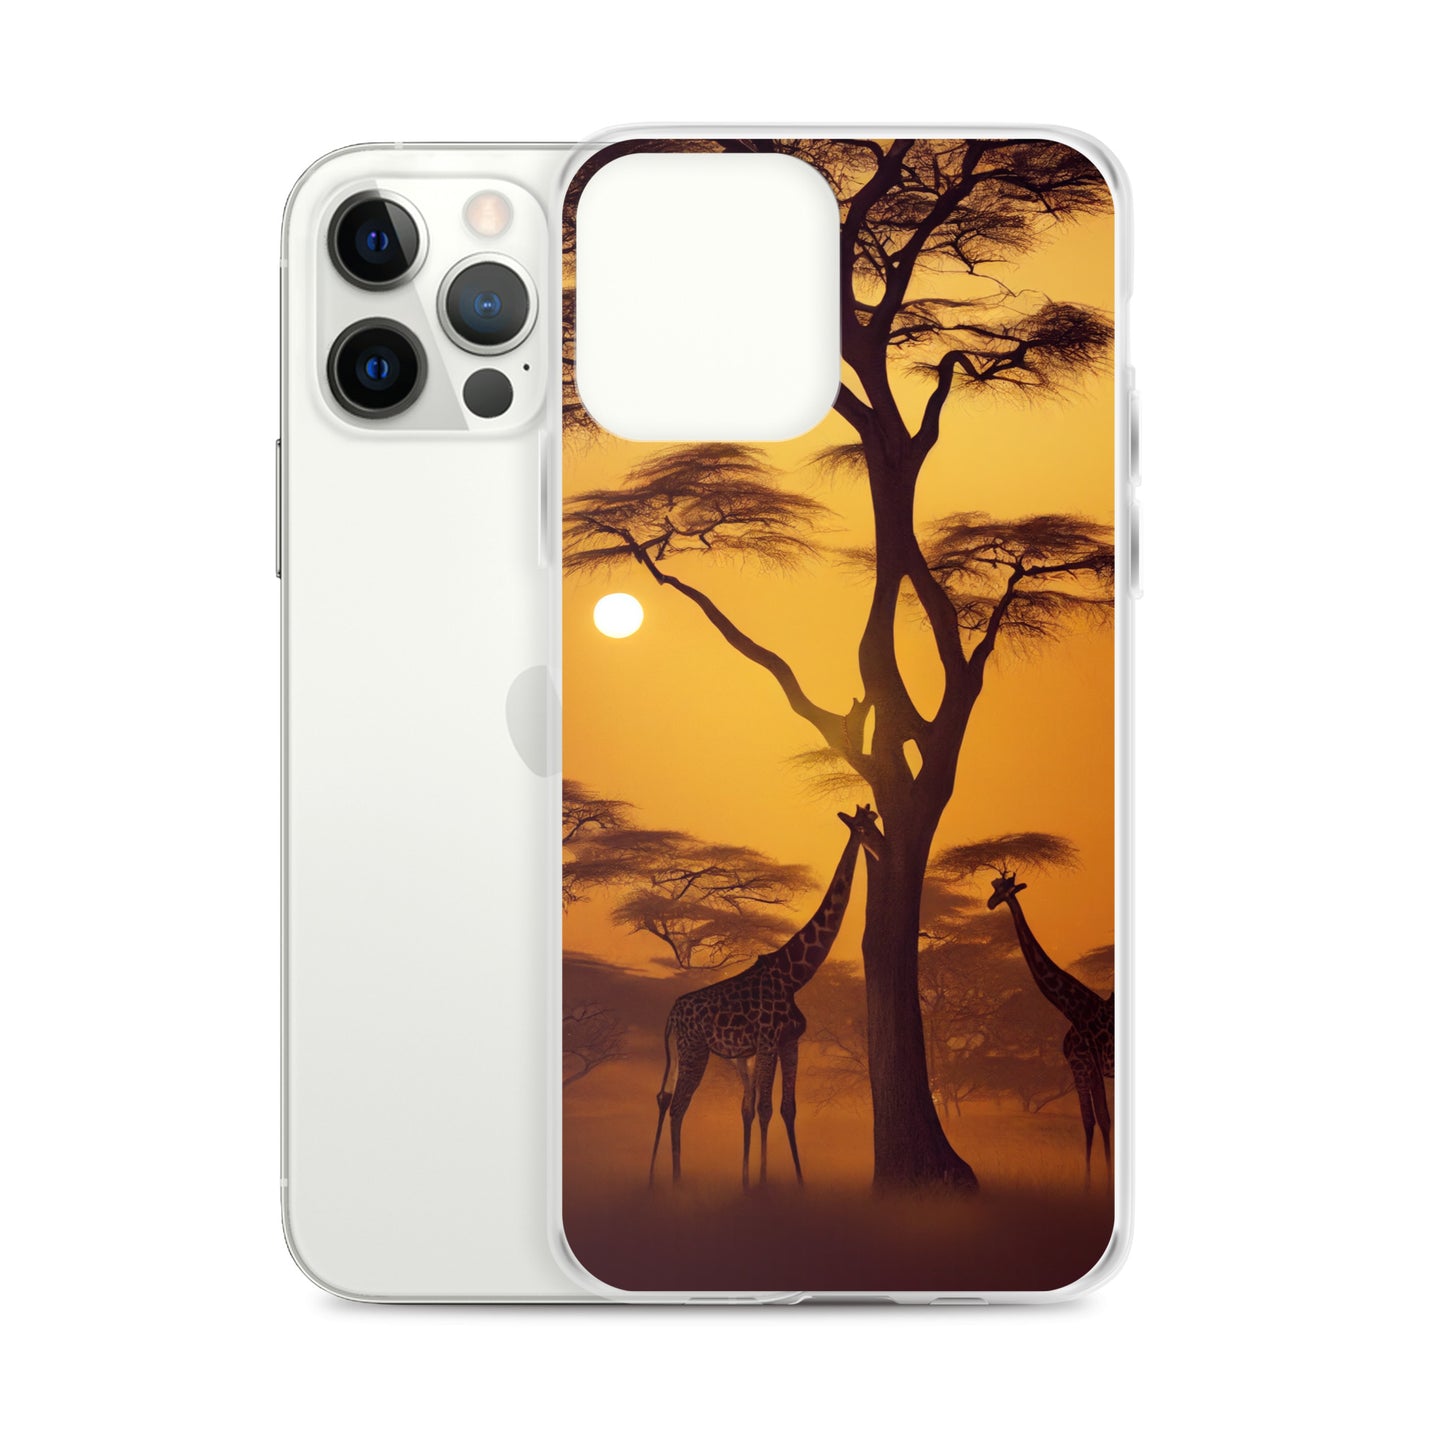 iPhone Case - African Vista - Giraffes Under Acacia Tree